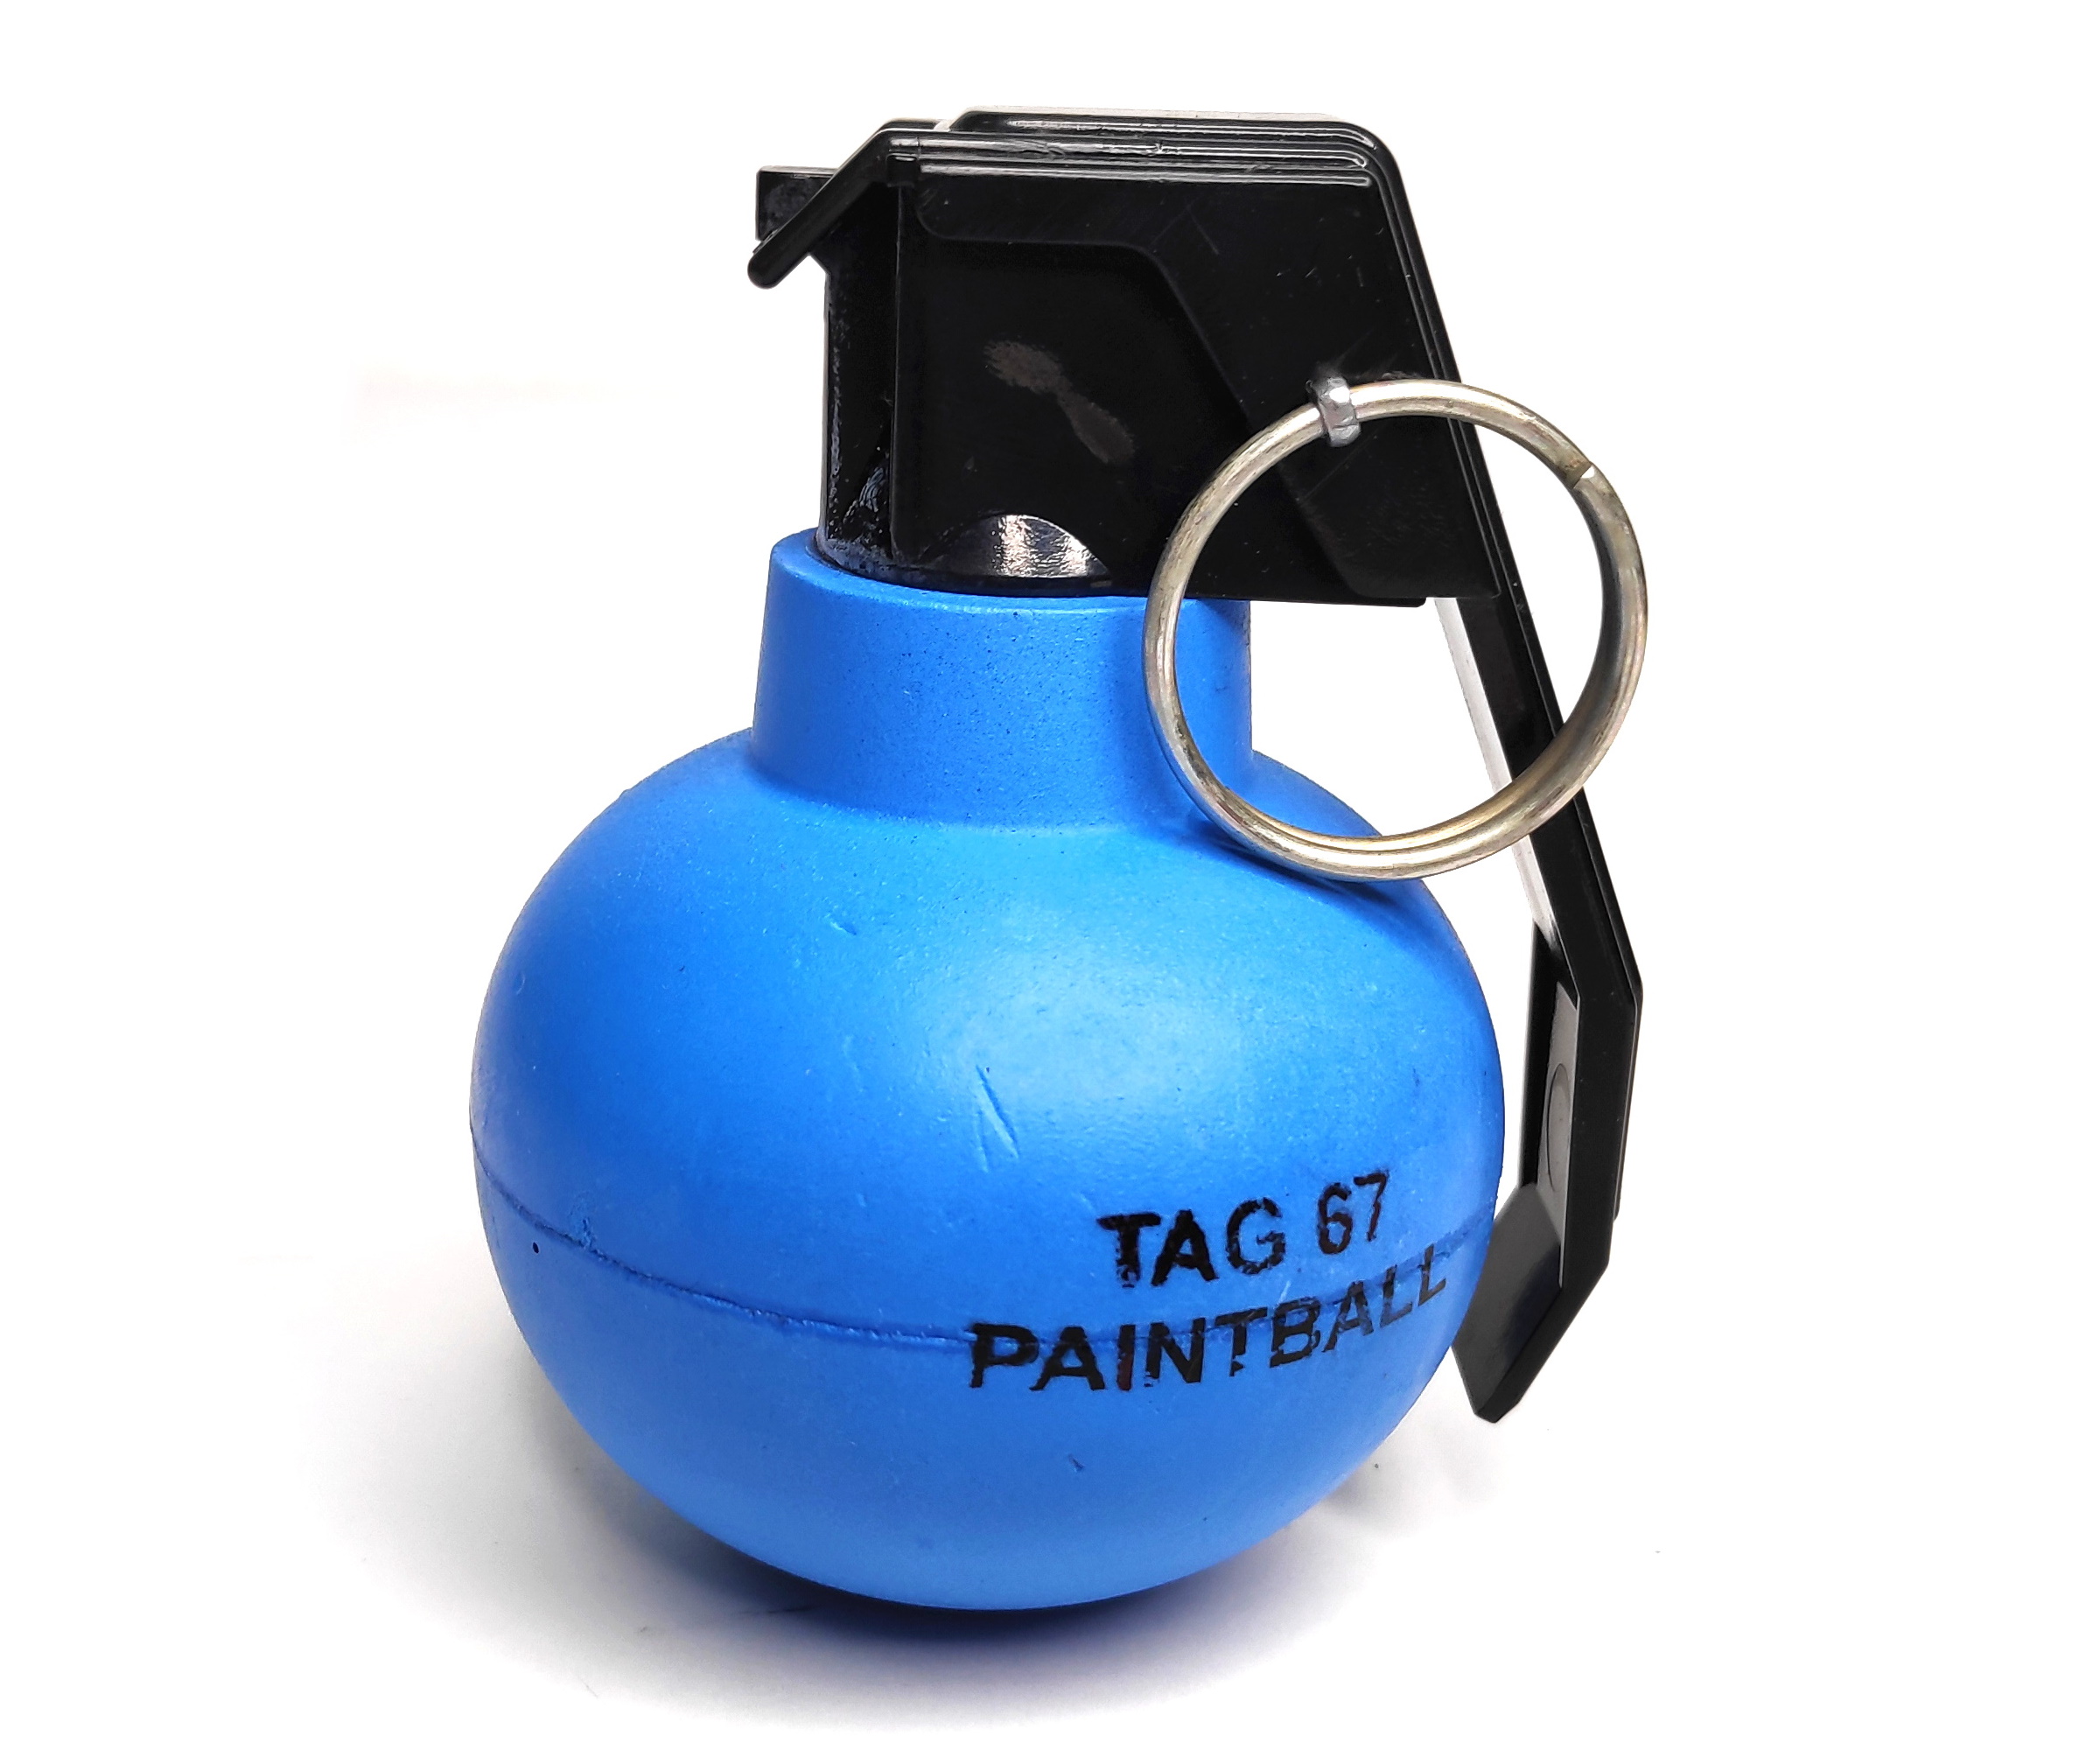 Граната учебная пейнтбольная TAG-67 (краска)